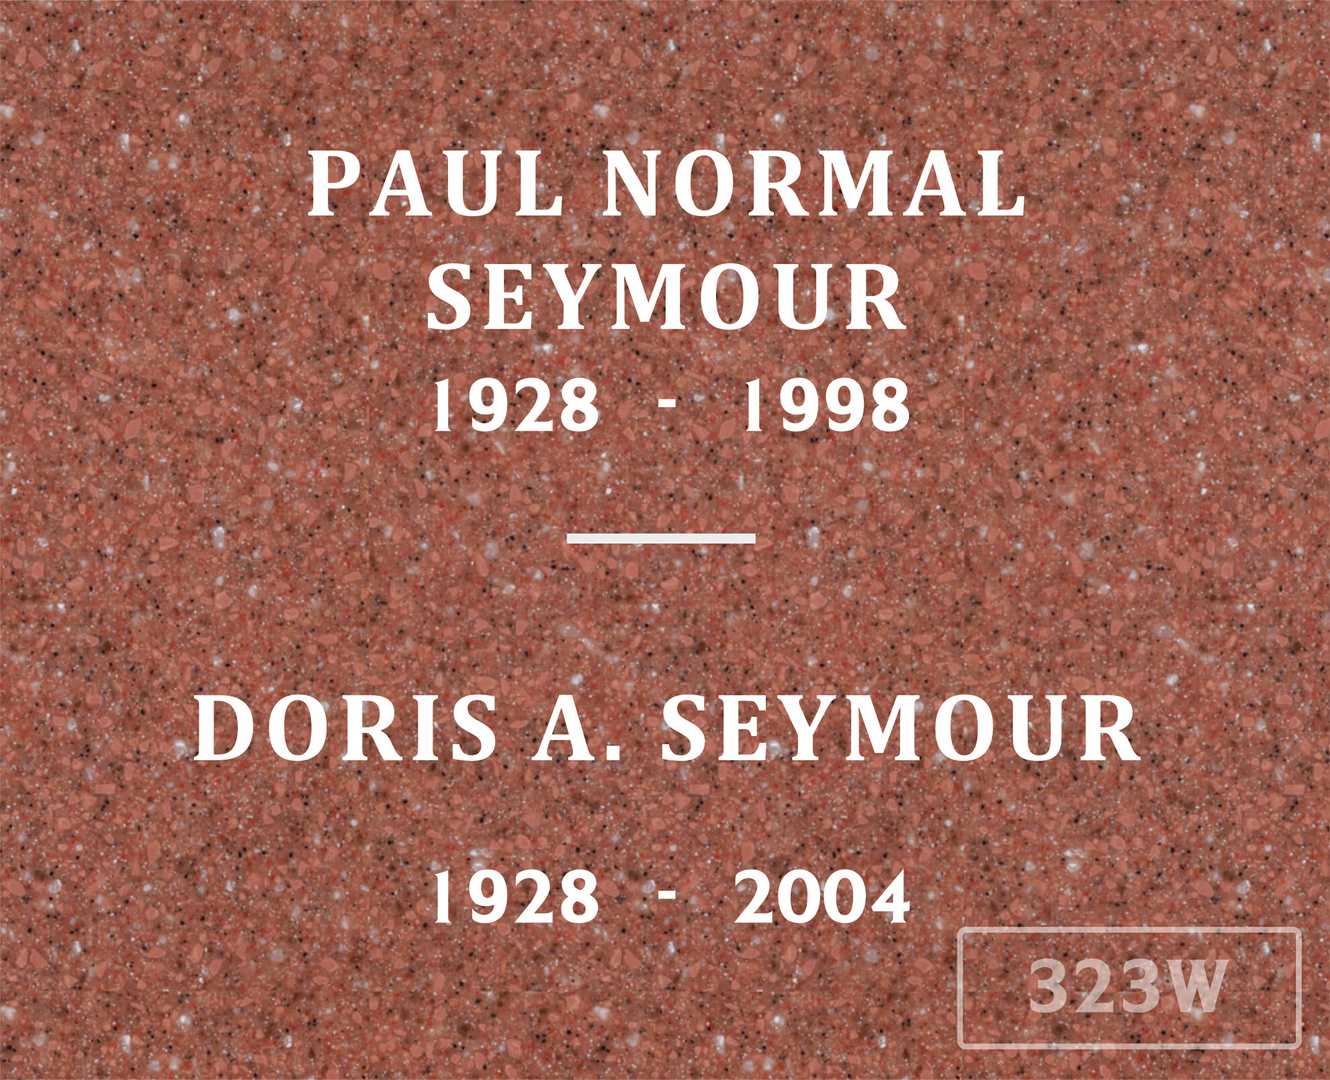 Doris A. Seymour's grave